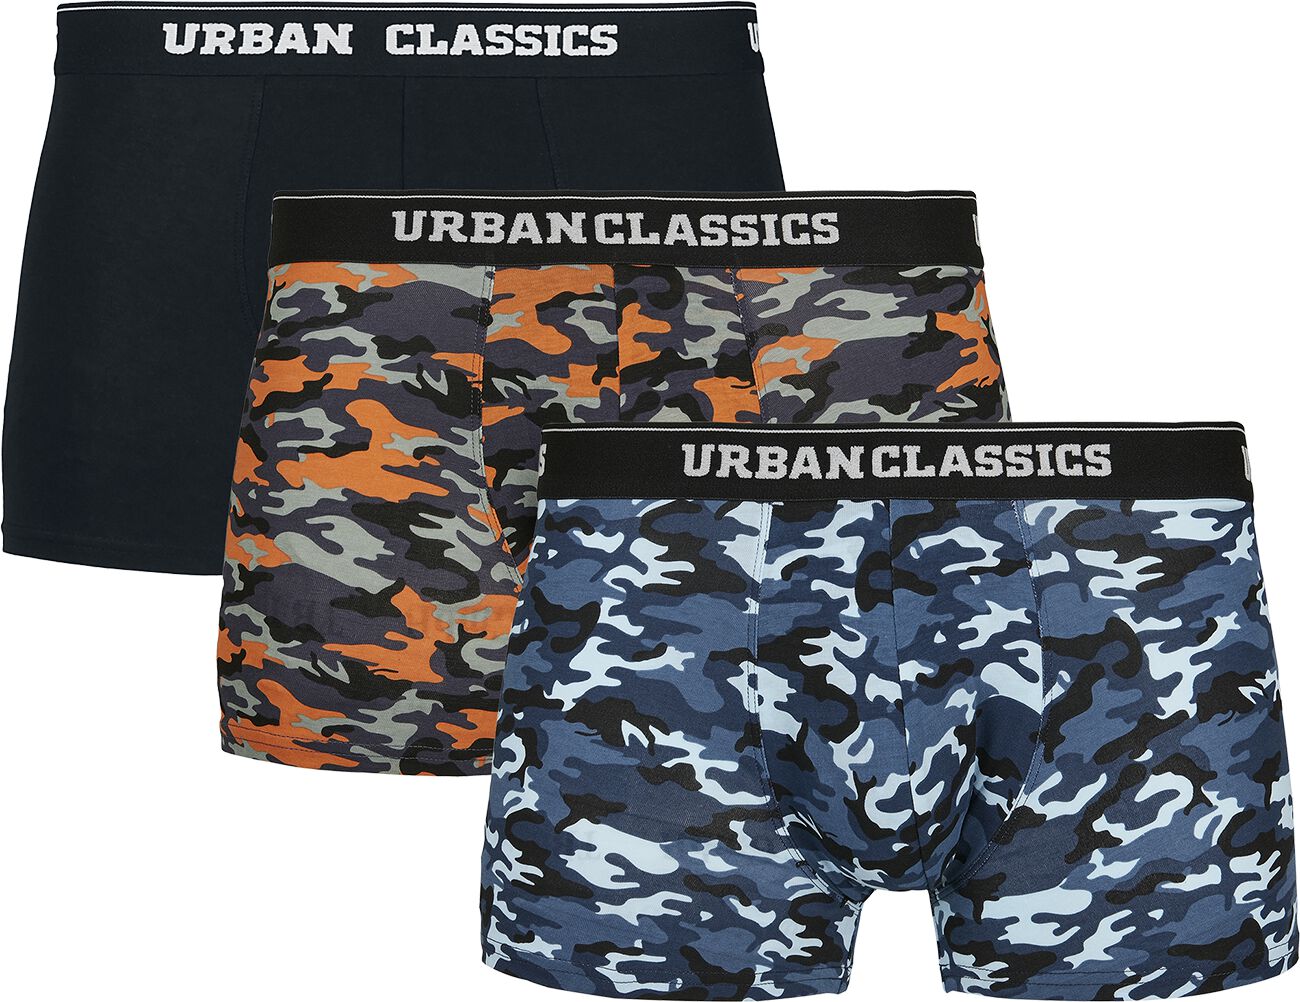 Urban Classics Boxer Short 3-Pack Boxershort-Set schwarz camouflage in S